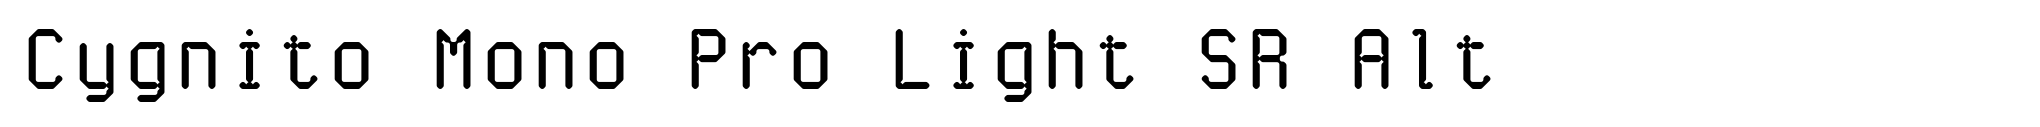 Cygnito Mono Pro Light SR Alt image